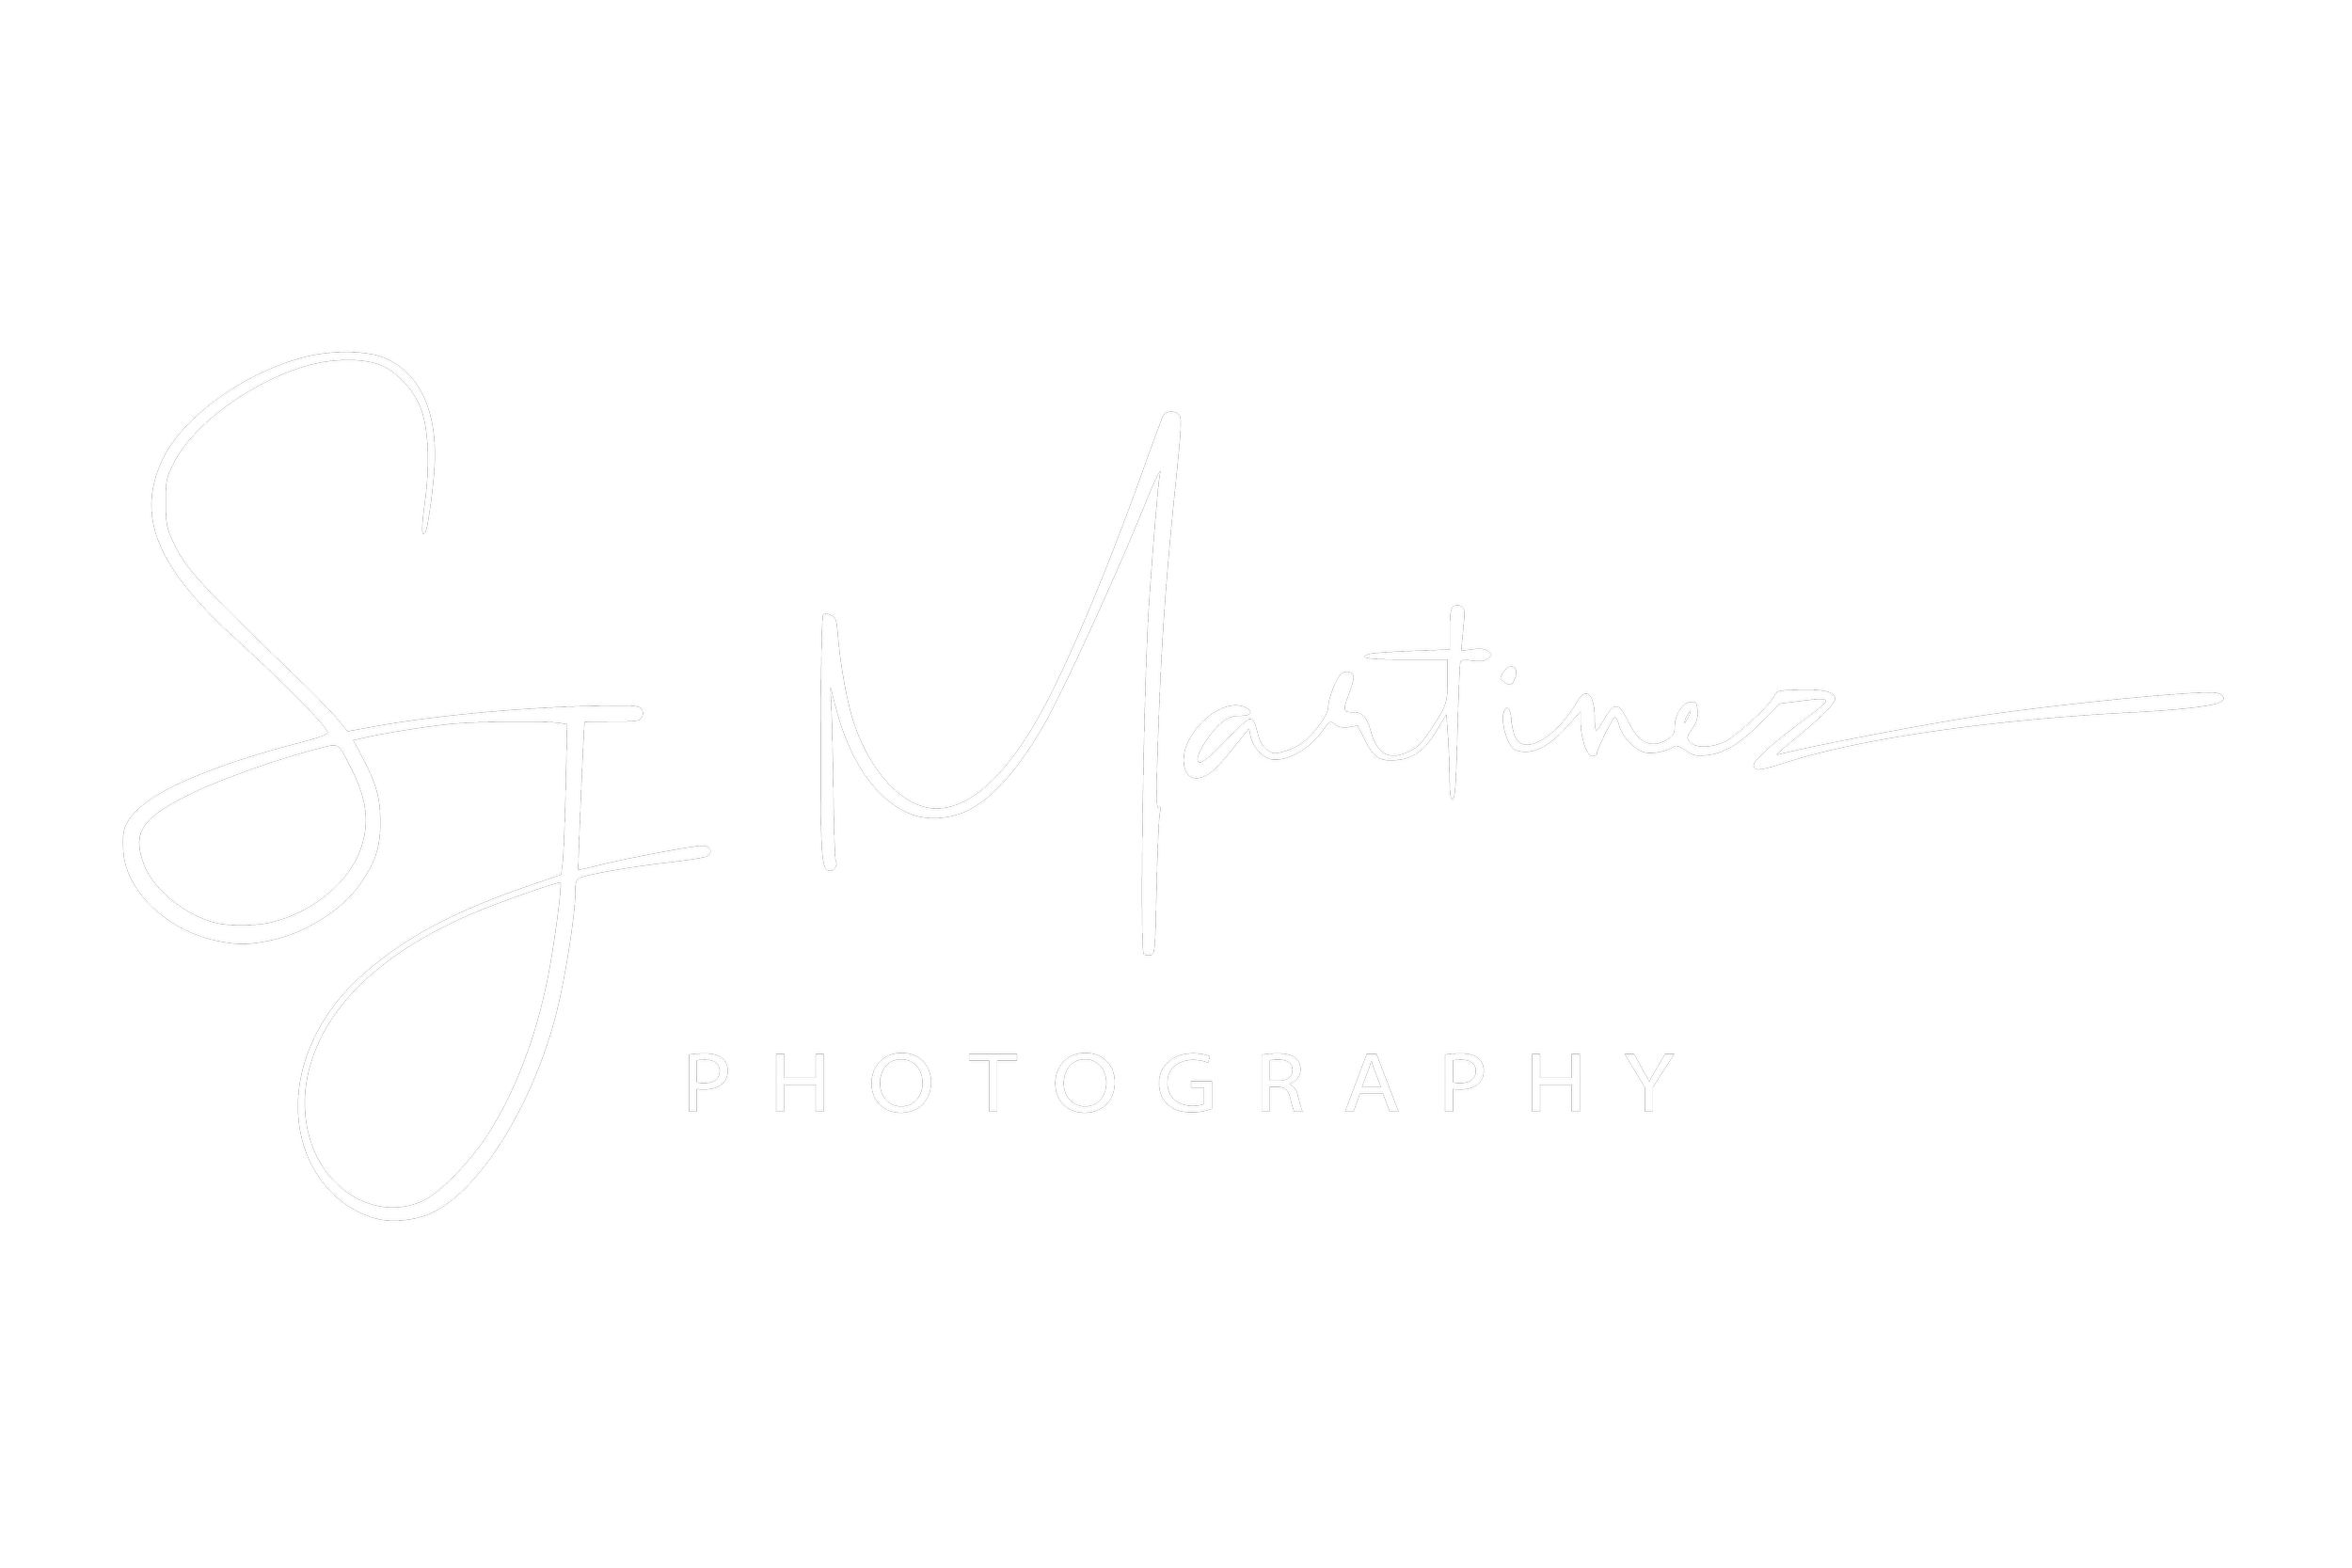 SJ Martinez Photography